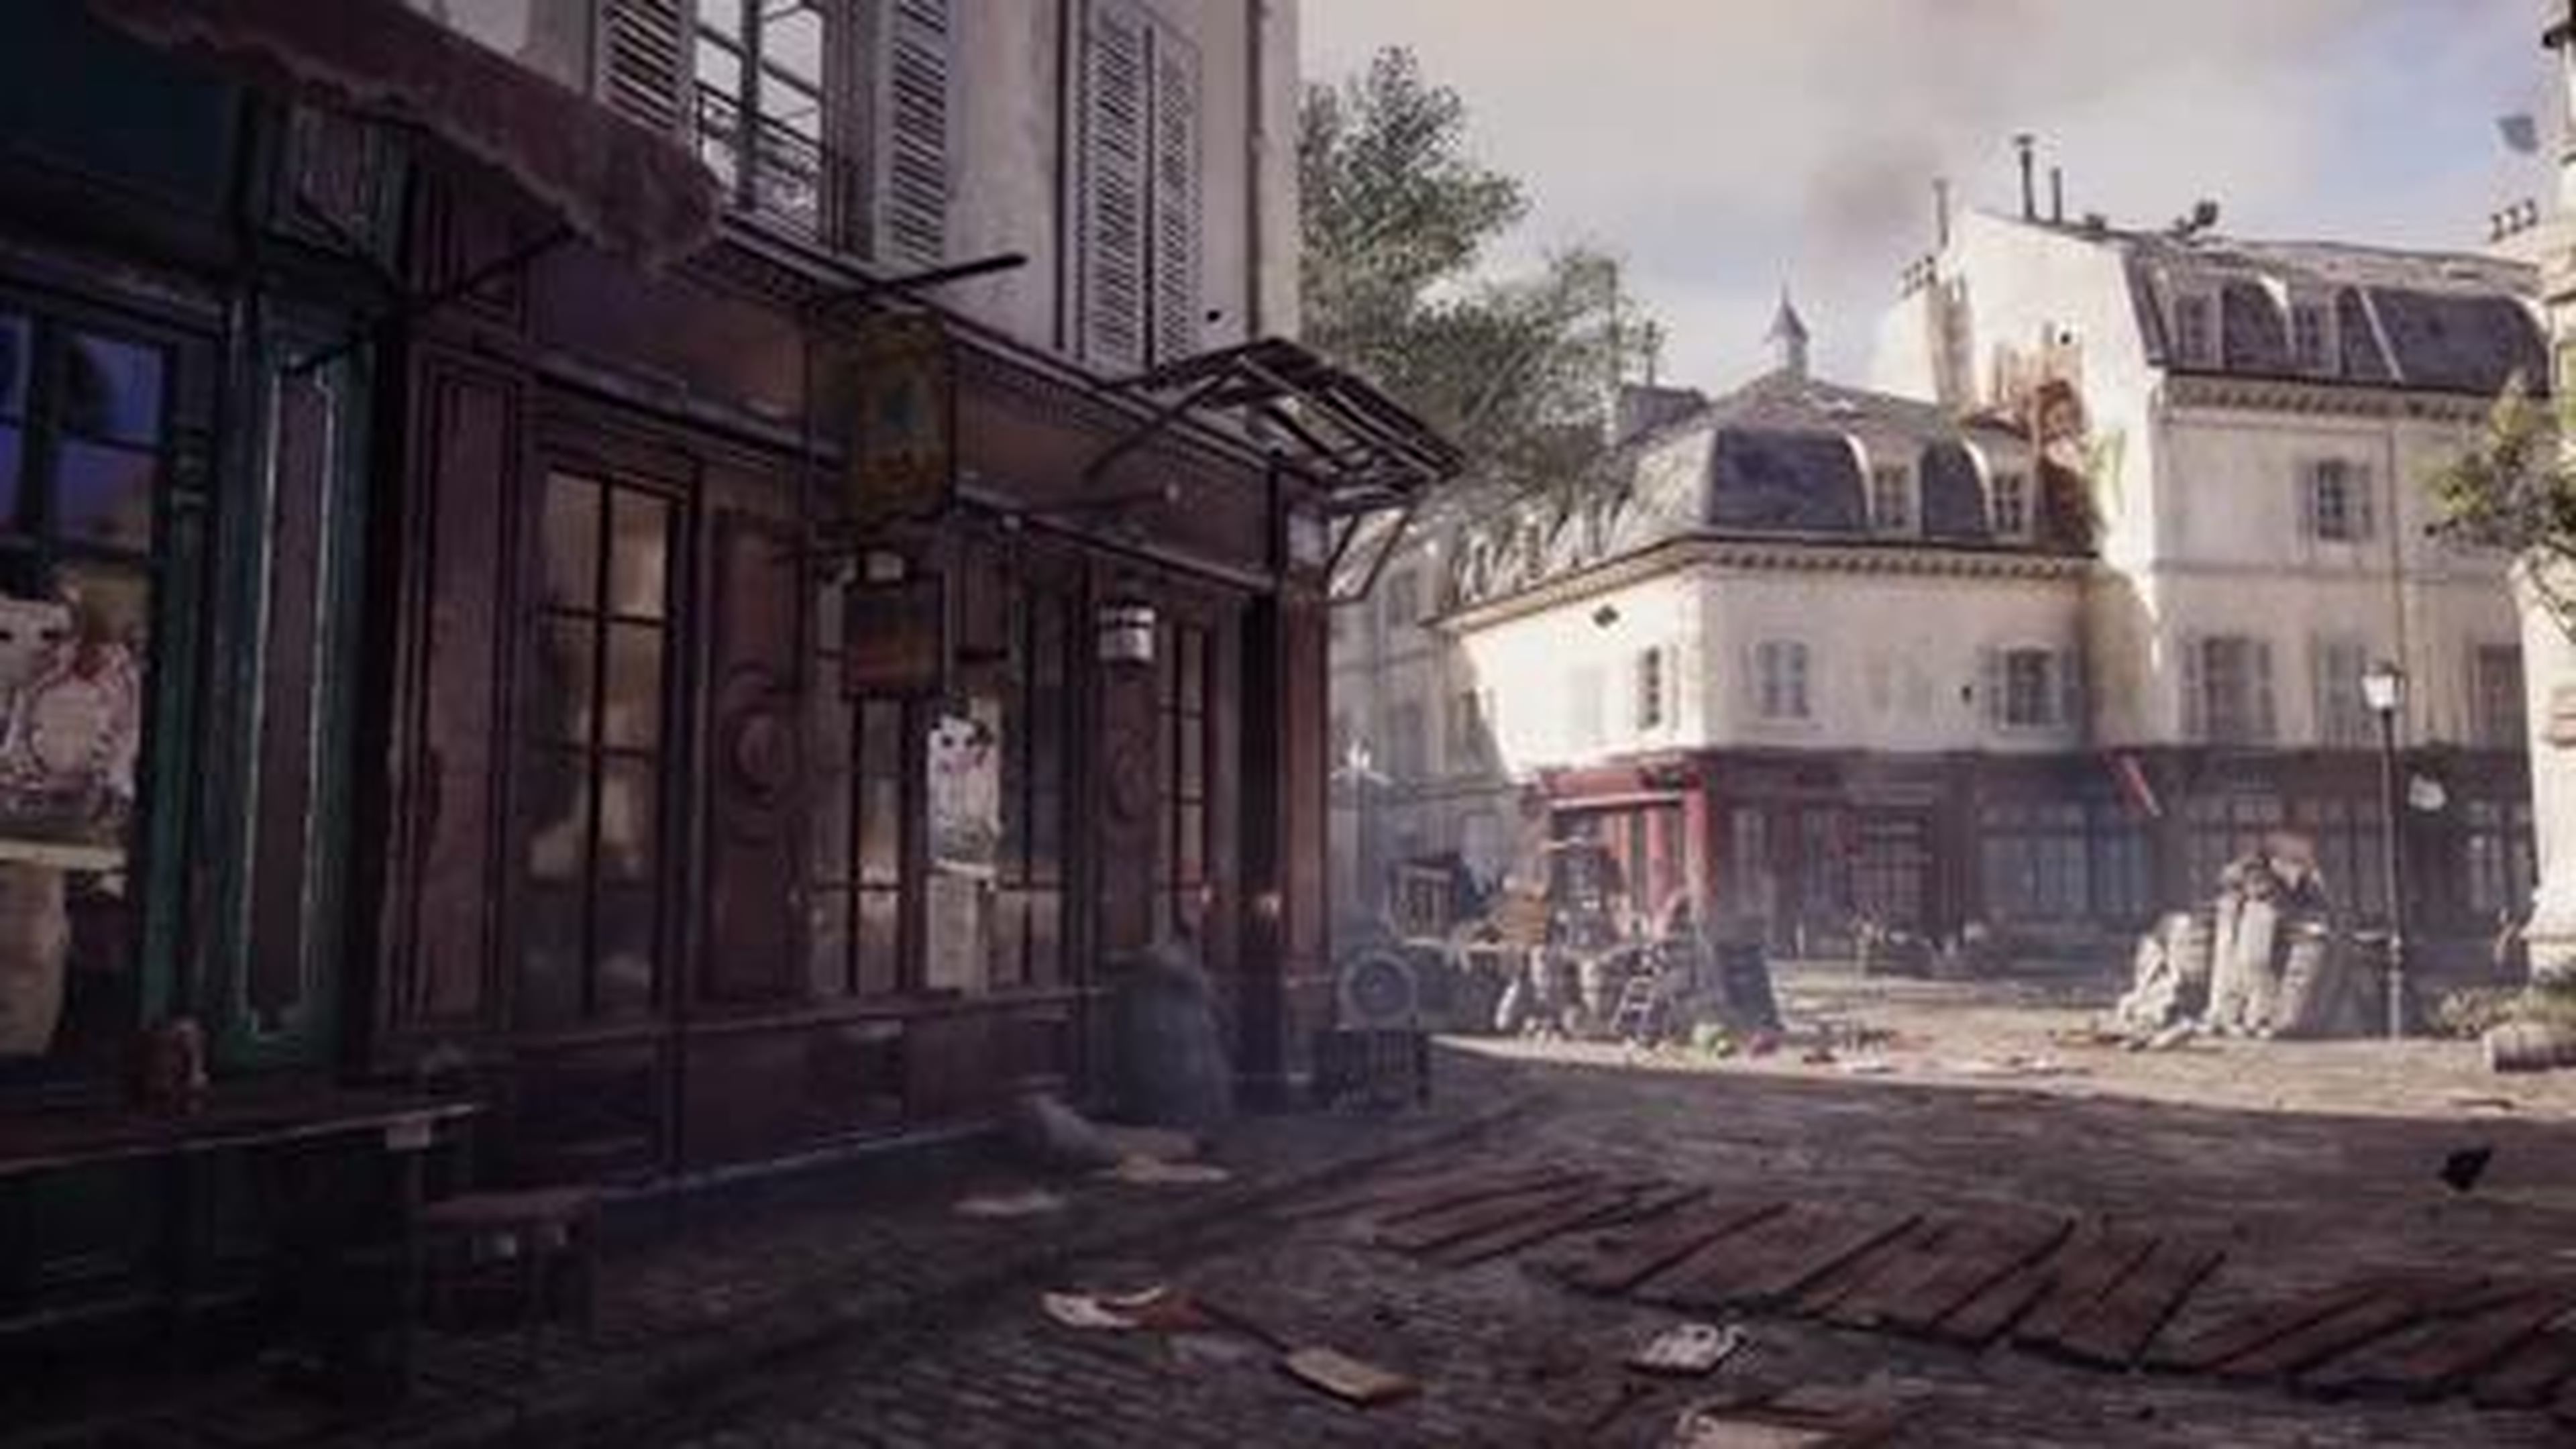 Assassin's Creed Unity Sneak Peek Video [UK]